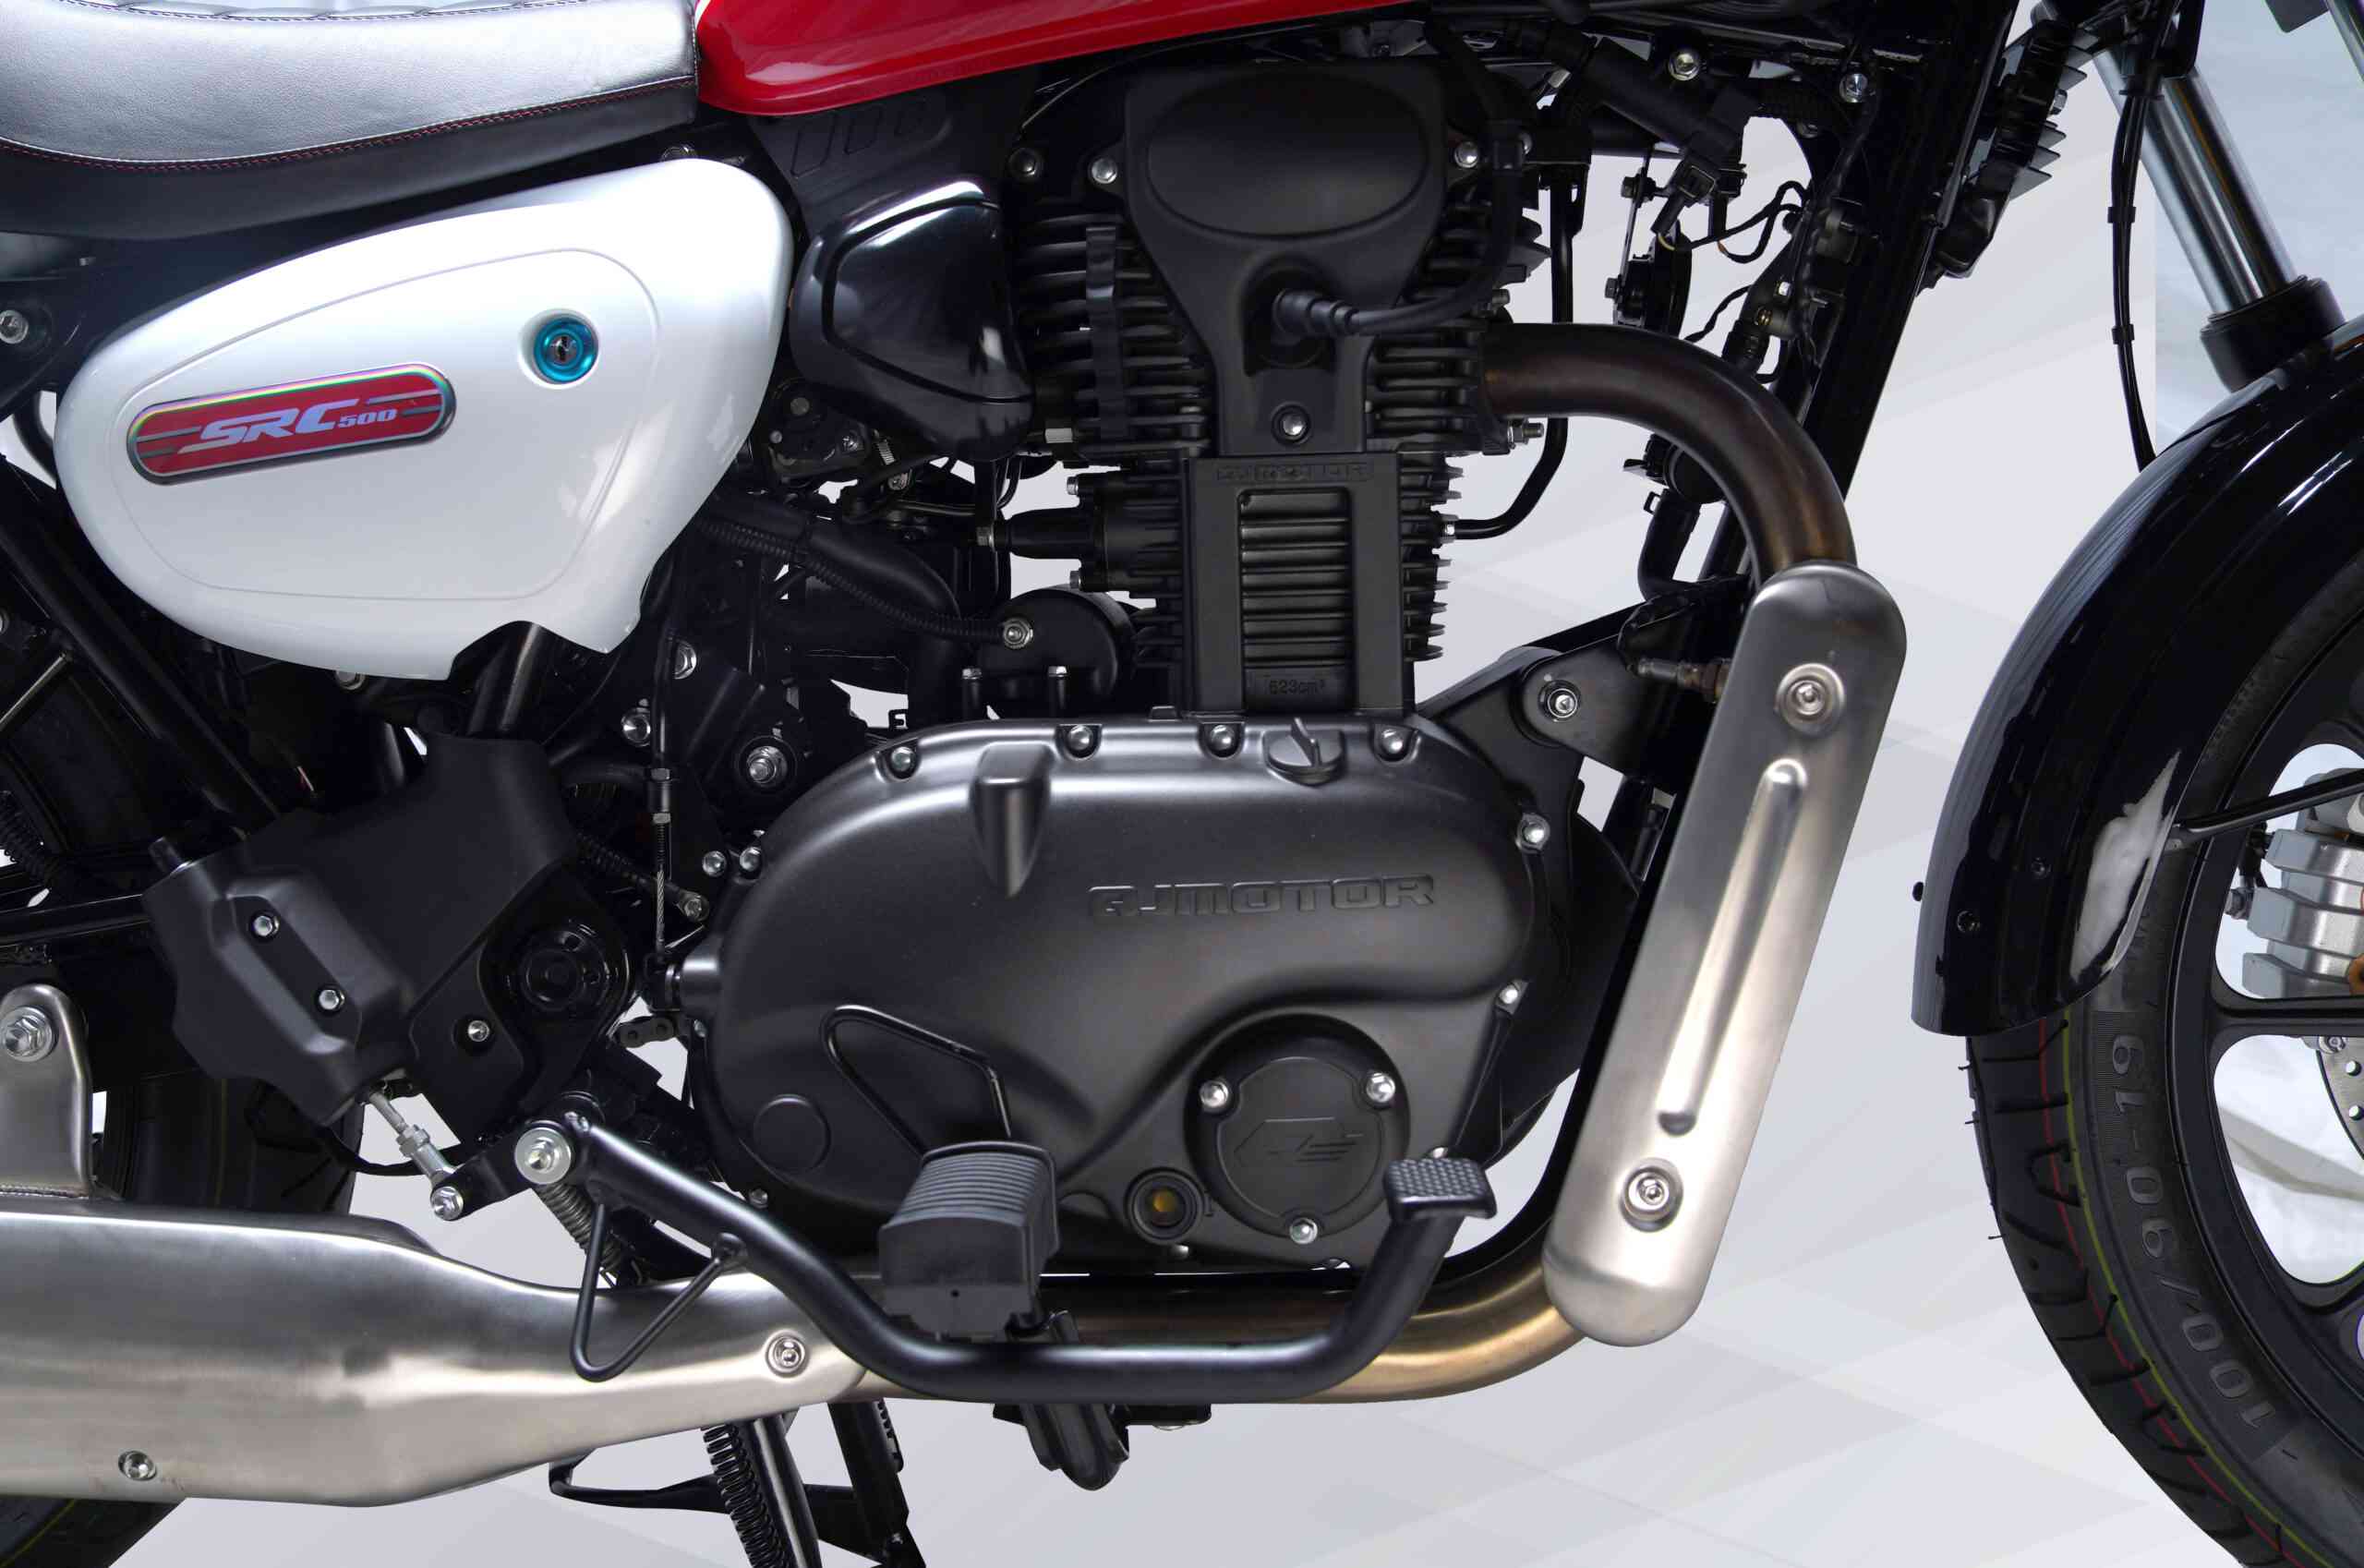 QJ Motor SRC500 - 500cc single-cylinder Air-cooled engine